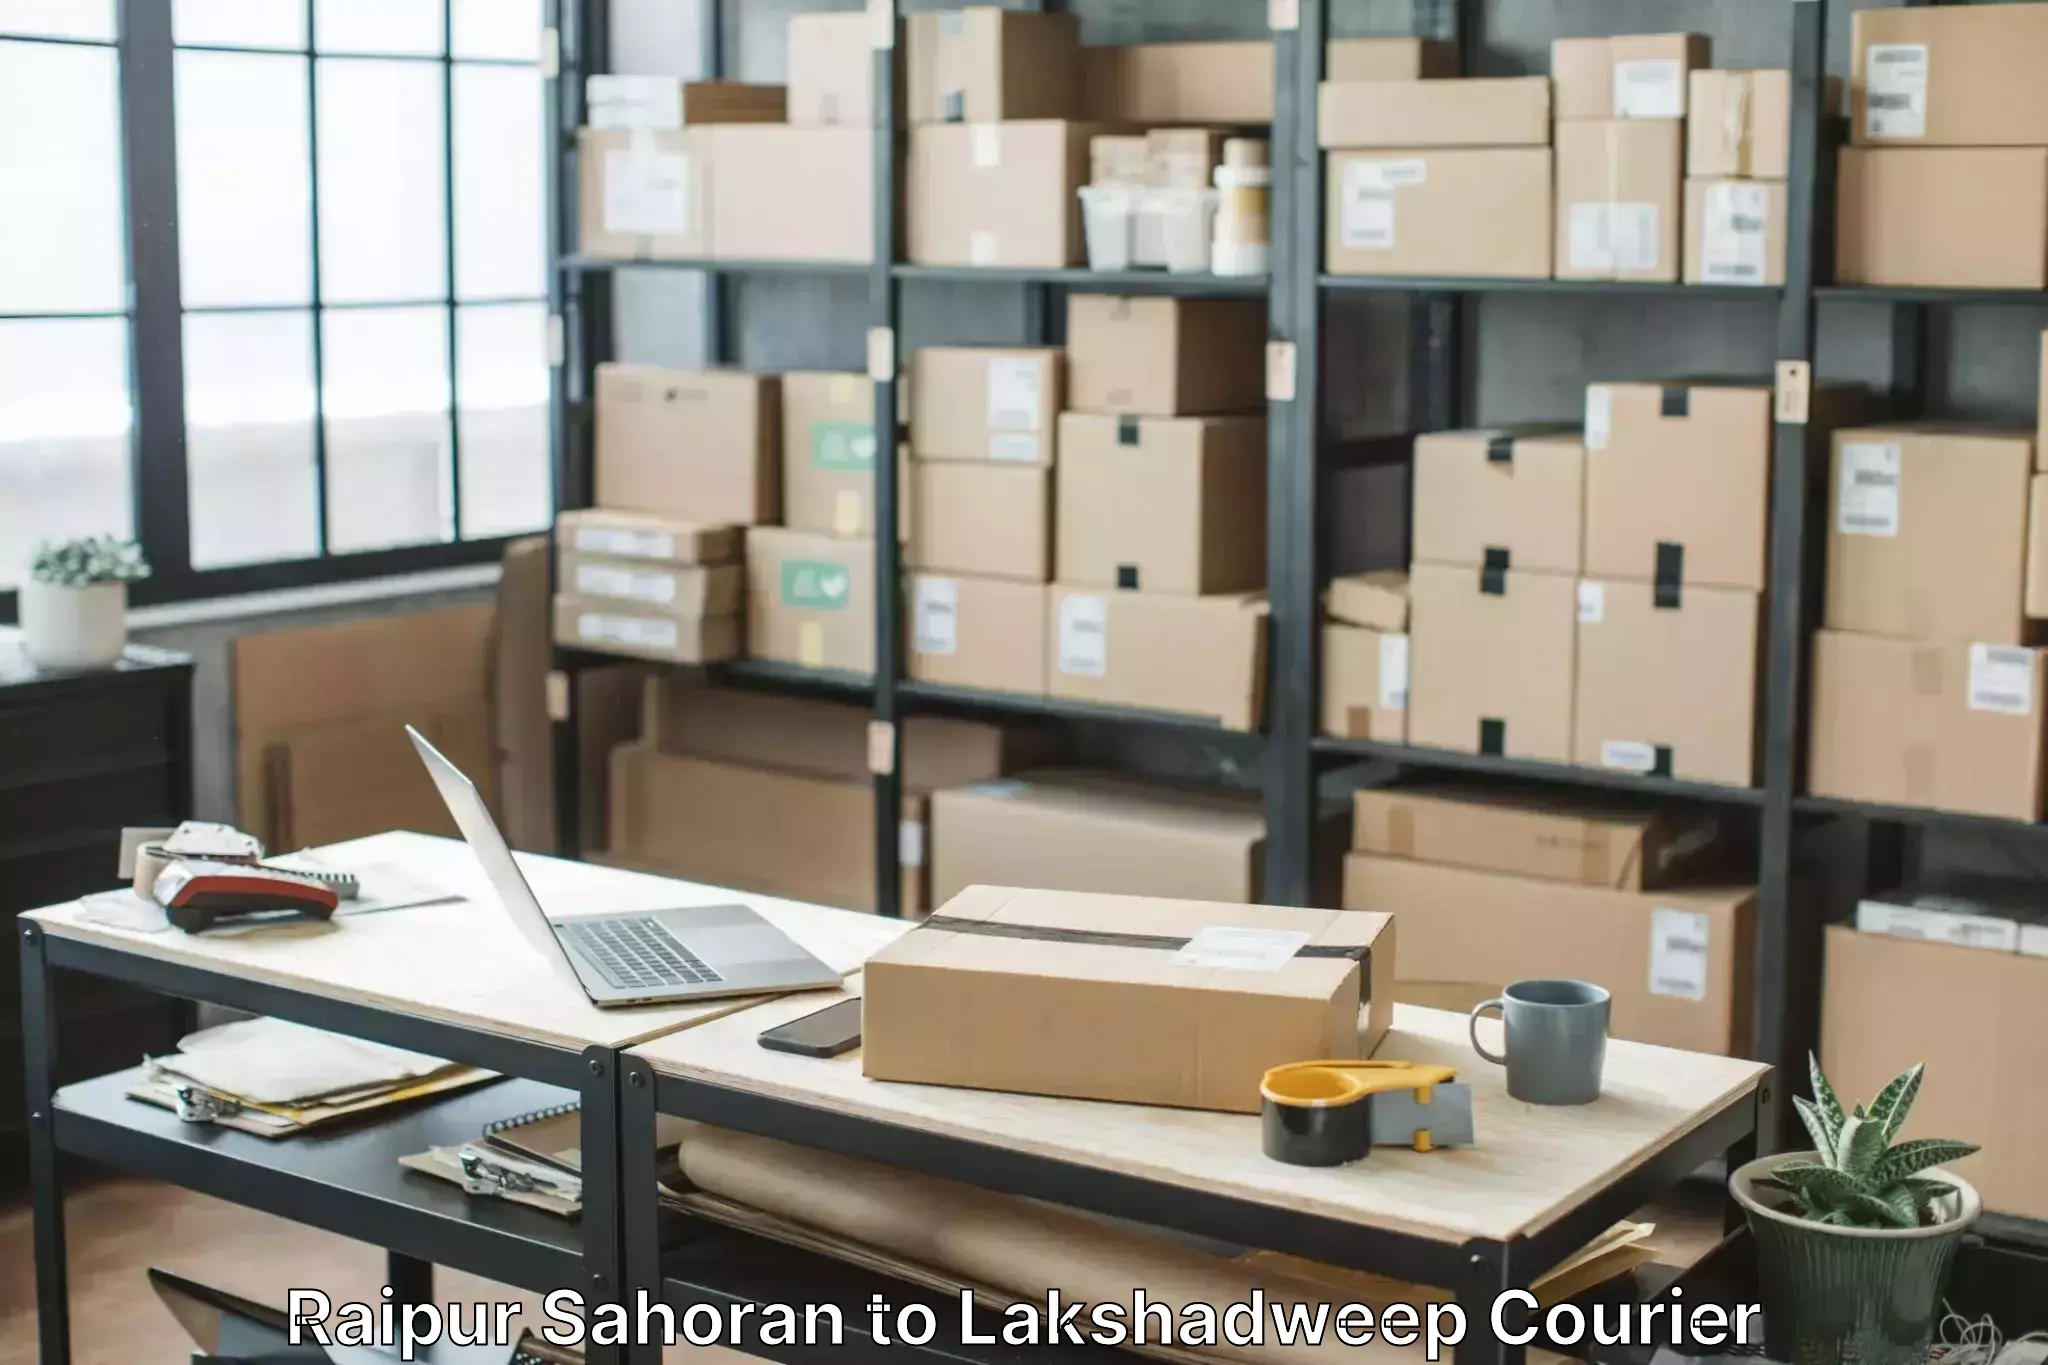 Trusted moving company Raipur Sahoran to Lakshadweep